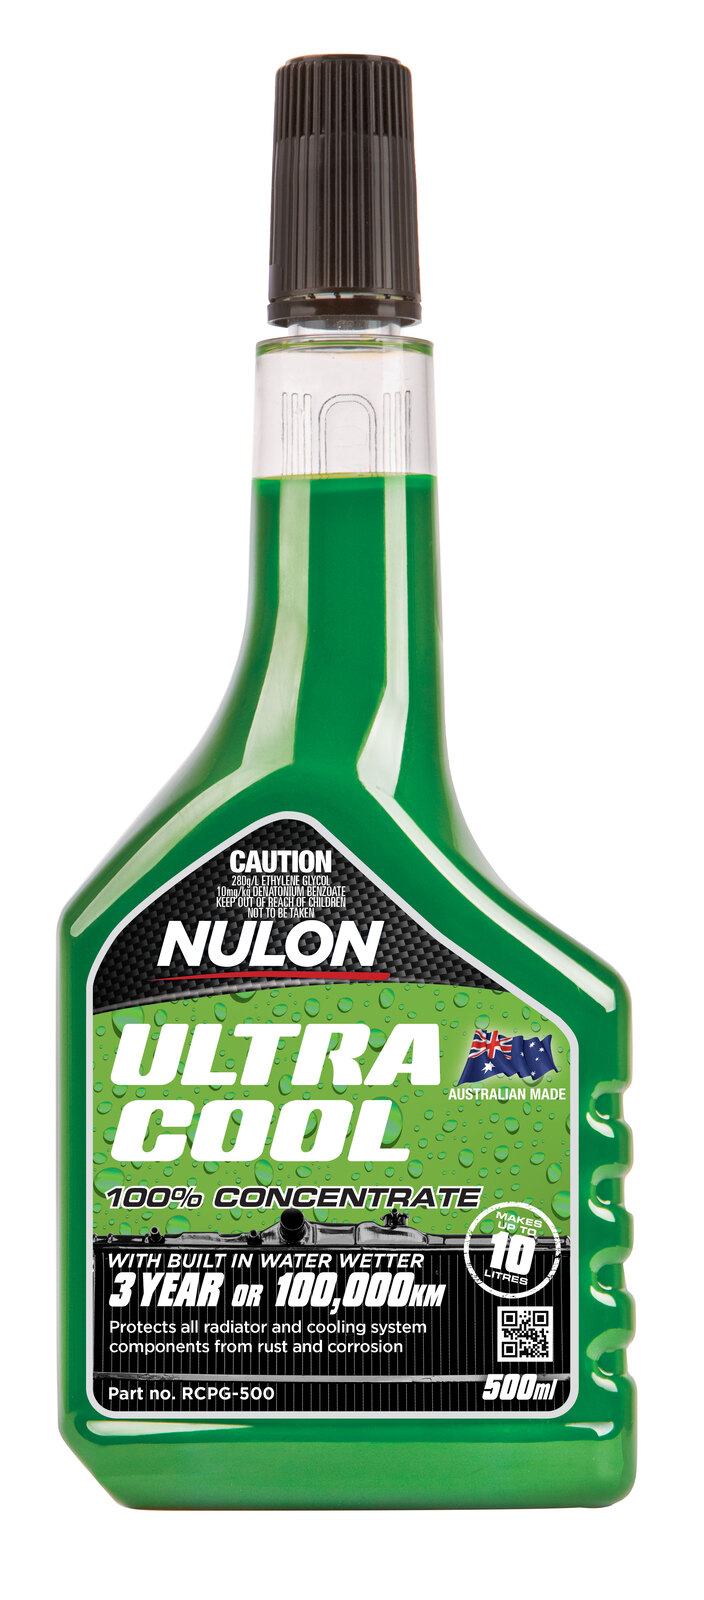 NULON Radiator Corrosion Protector Green 500Ml, Each